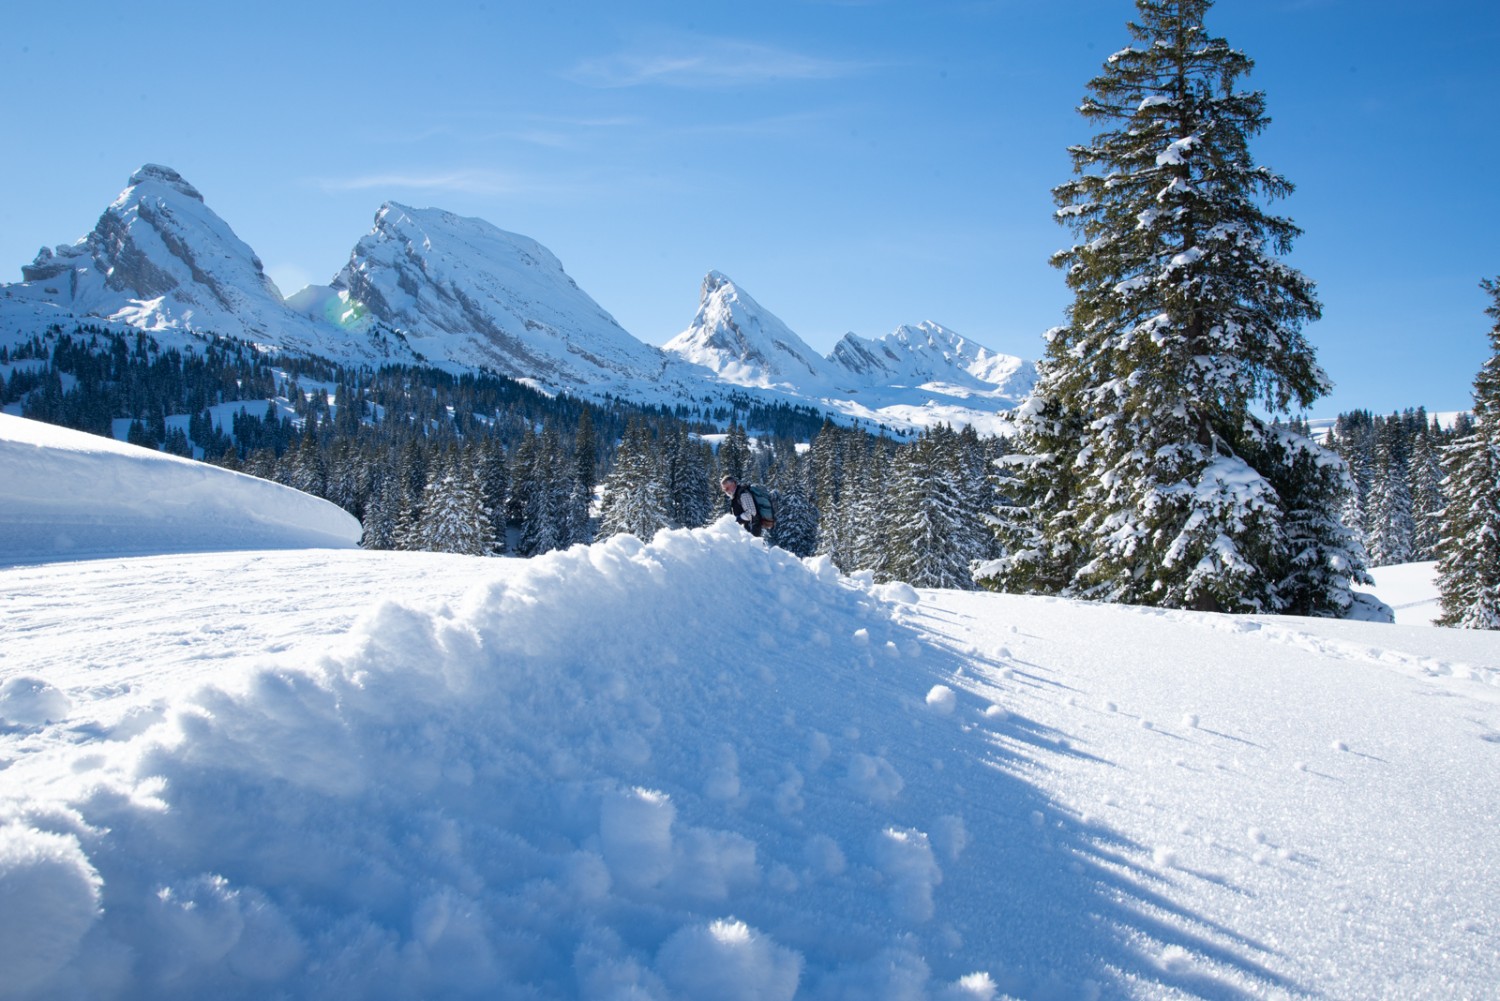 Le paradis hivernal de Selamatt. Photo: Randy Schmieder